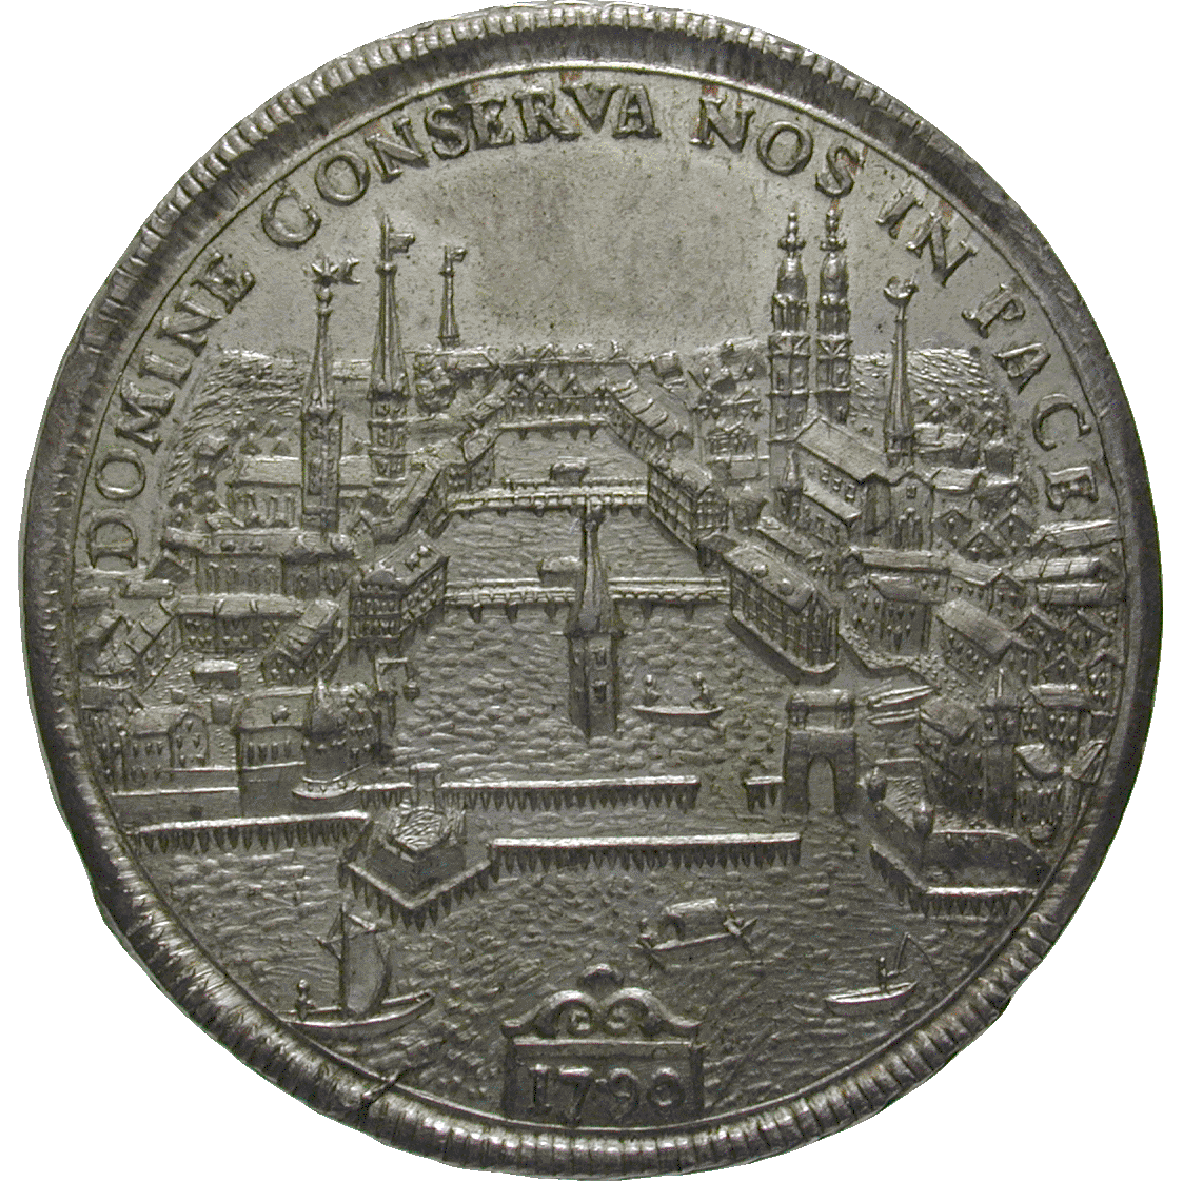 Republic of Zurich, Taler 1790 (reverse)